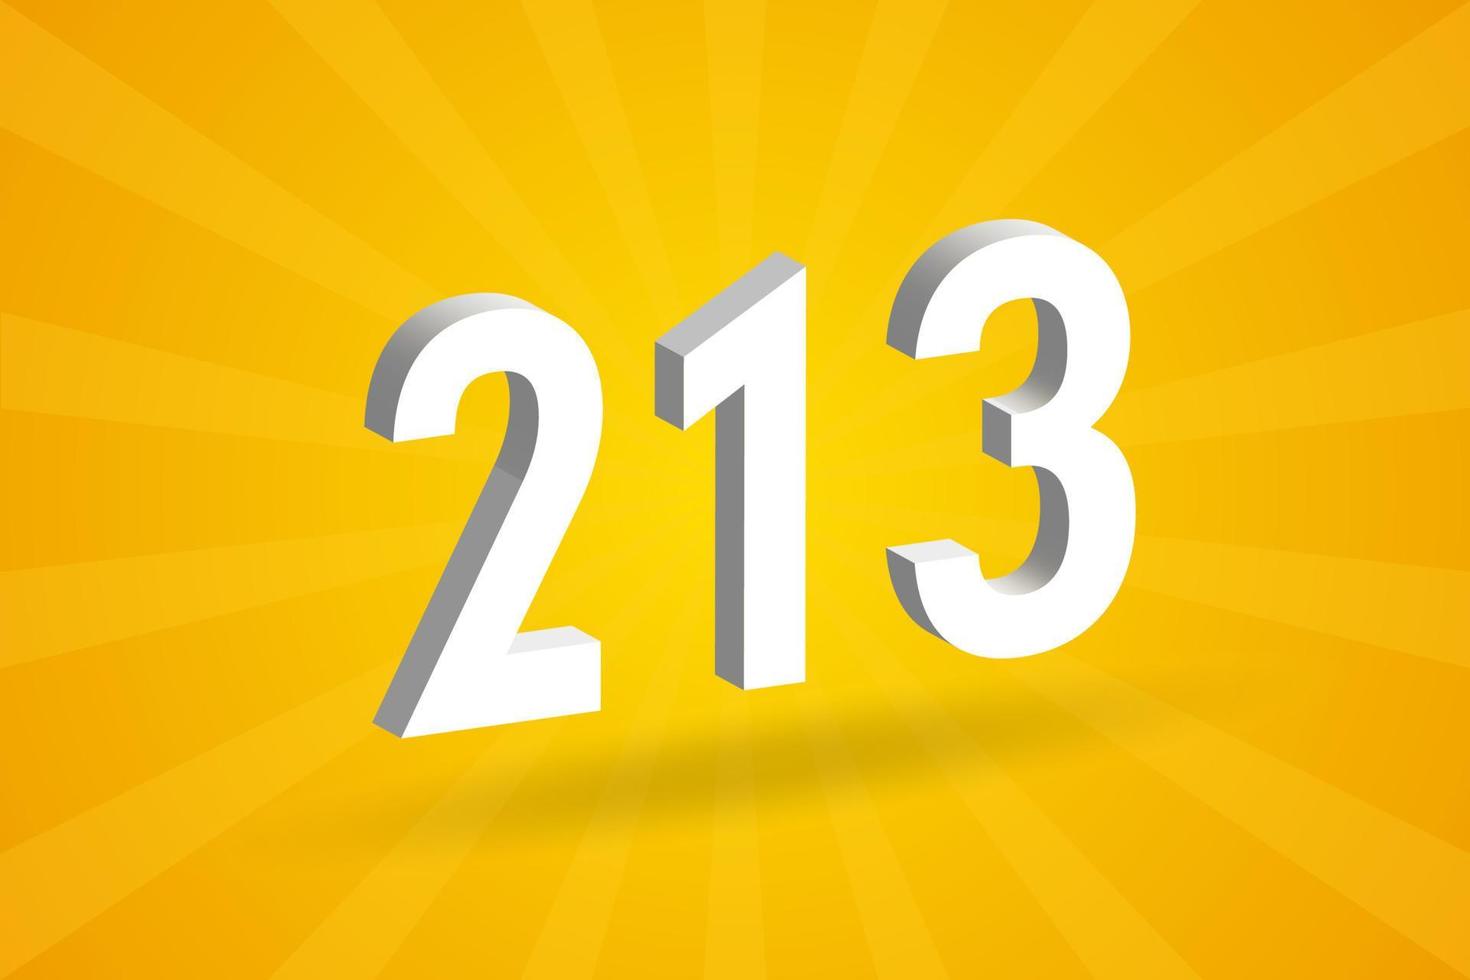 3d 213 siffra font alfabet. vit 3d siffra 213 med gul bakgrund vektor